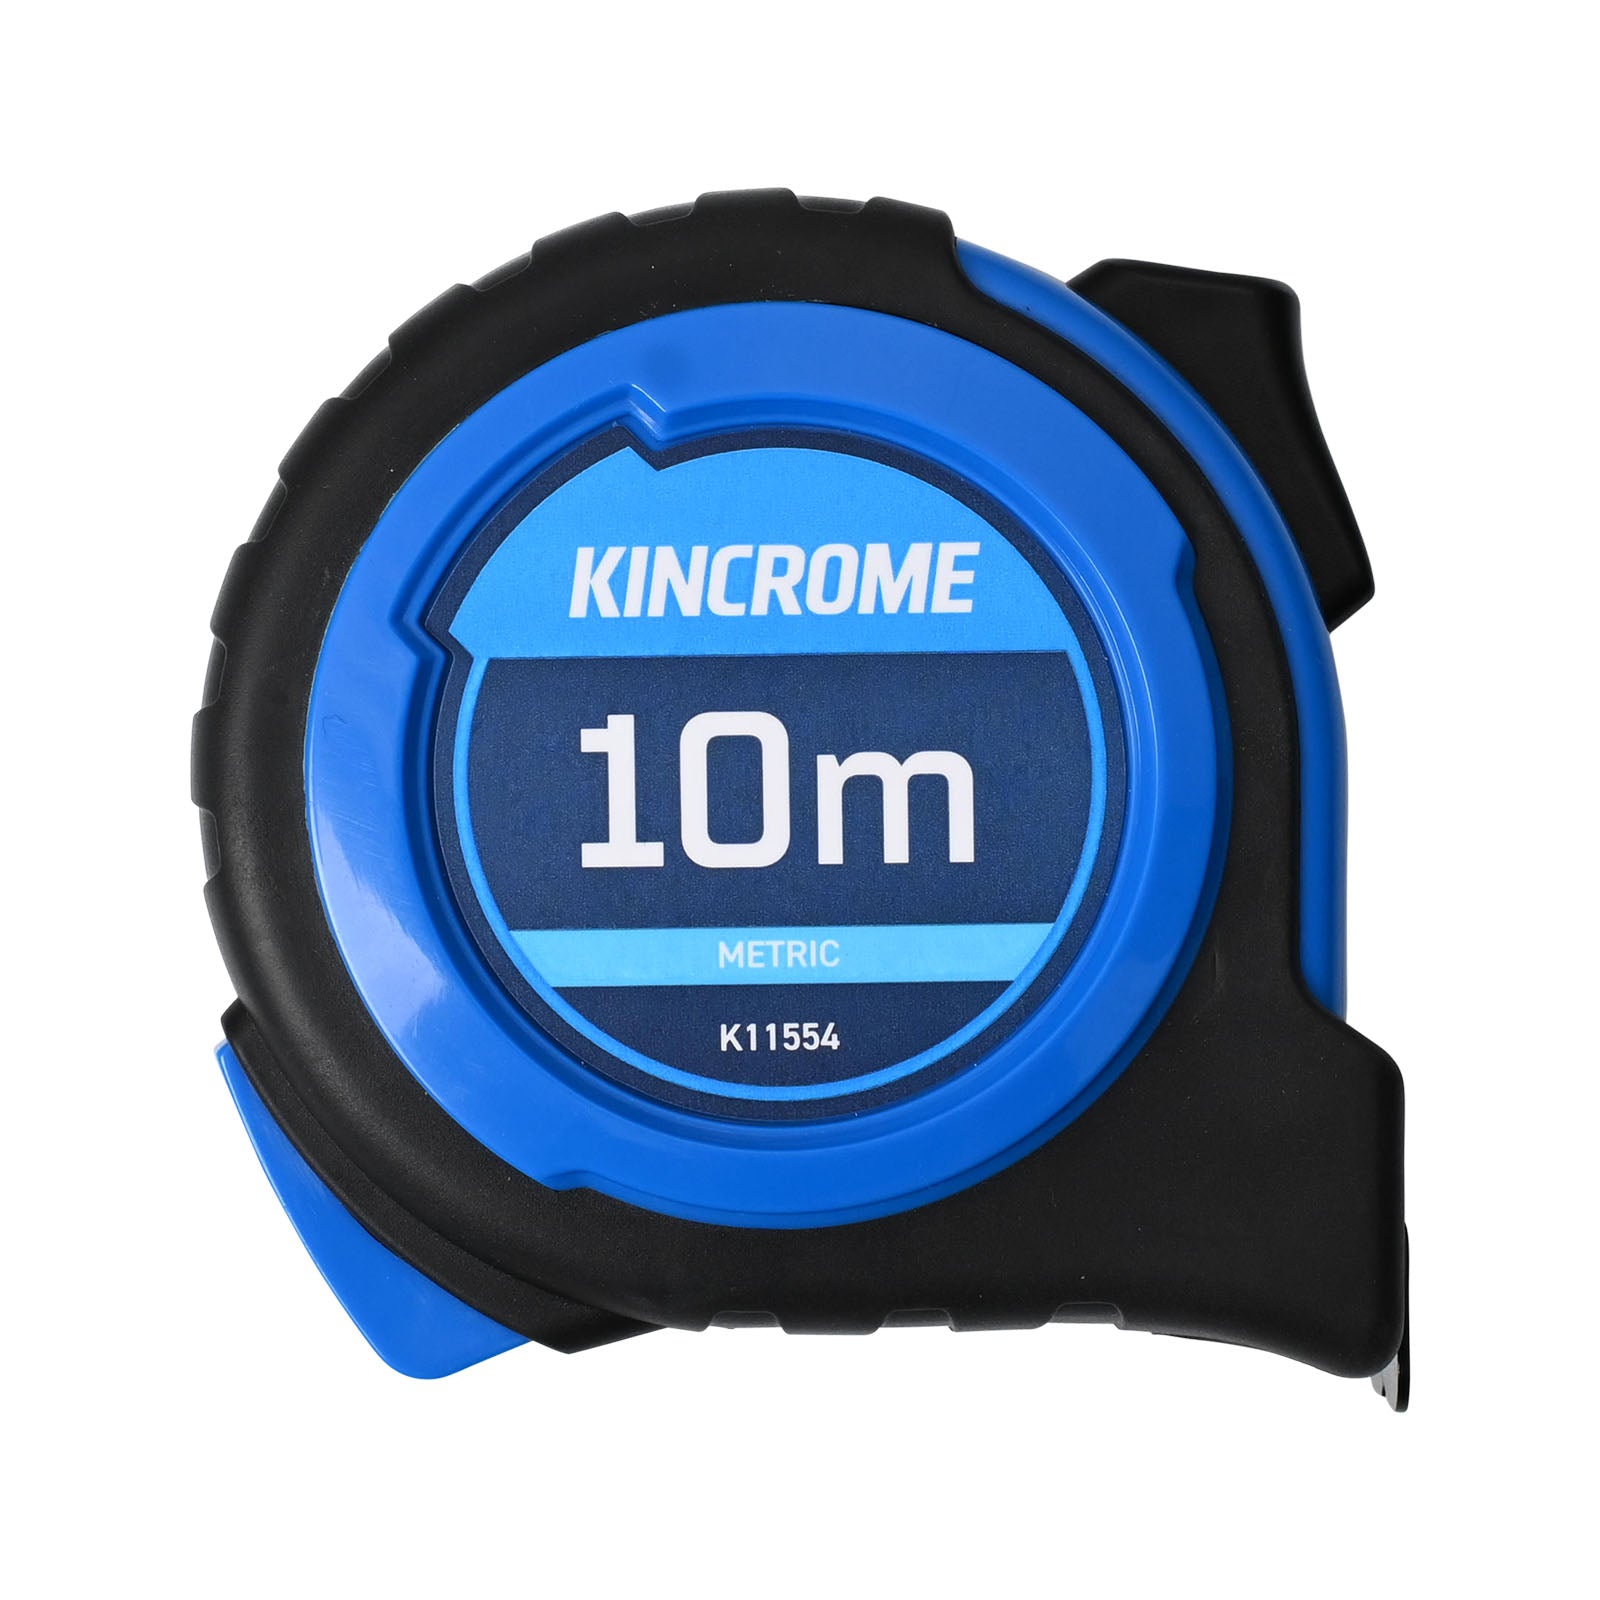 10M Tape Measure, Metric - K11554 by Kincrome